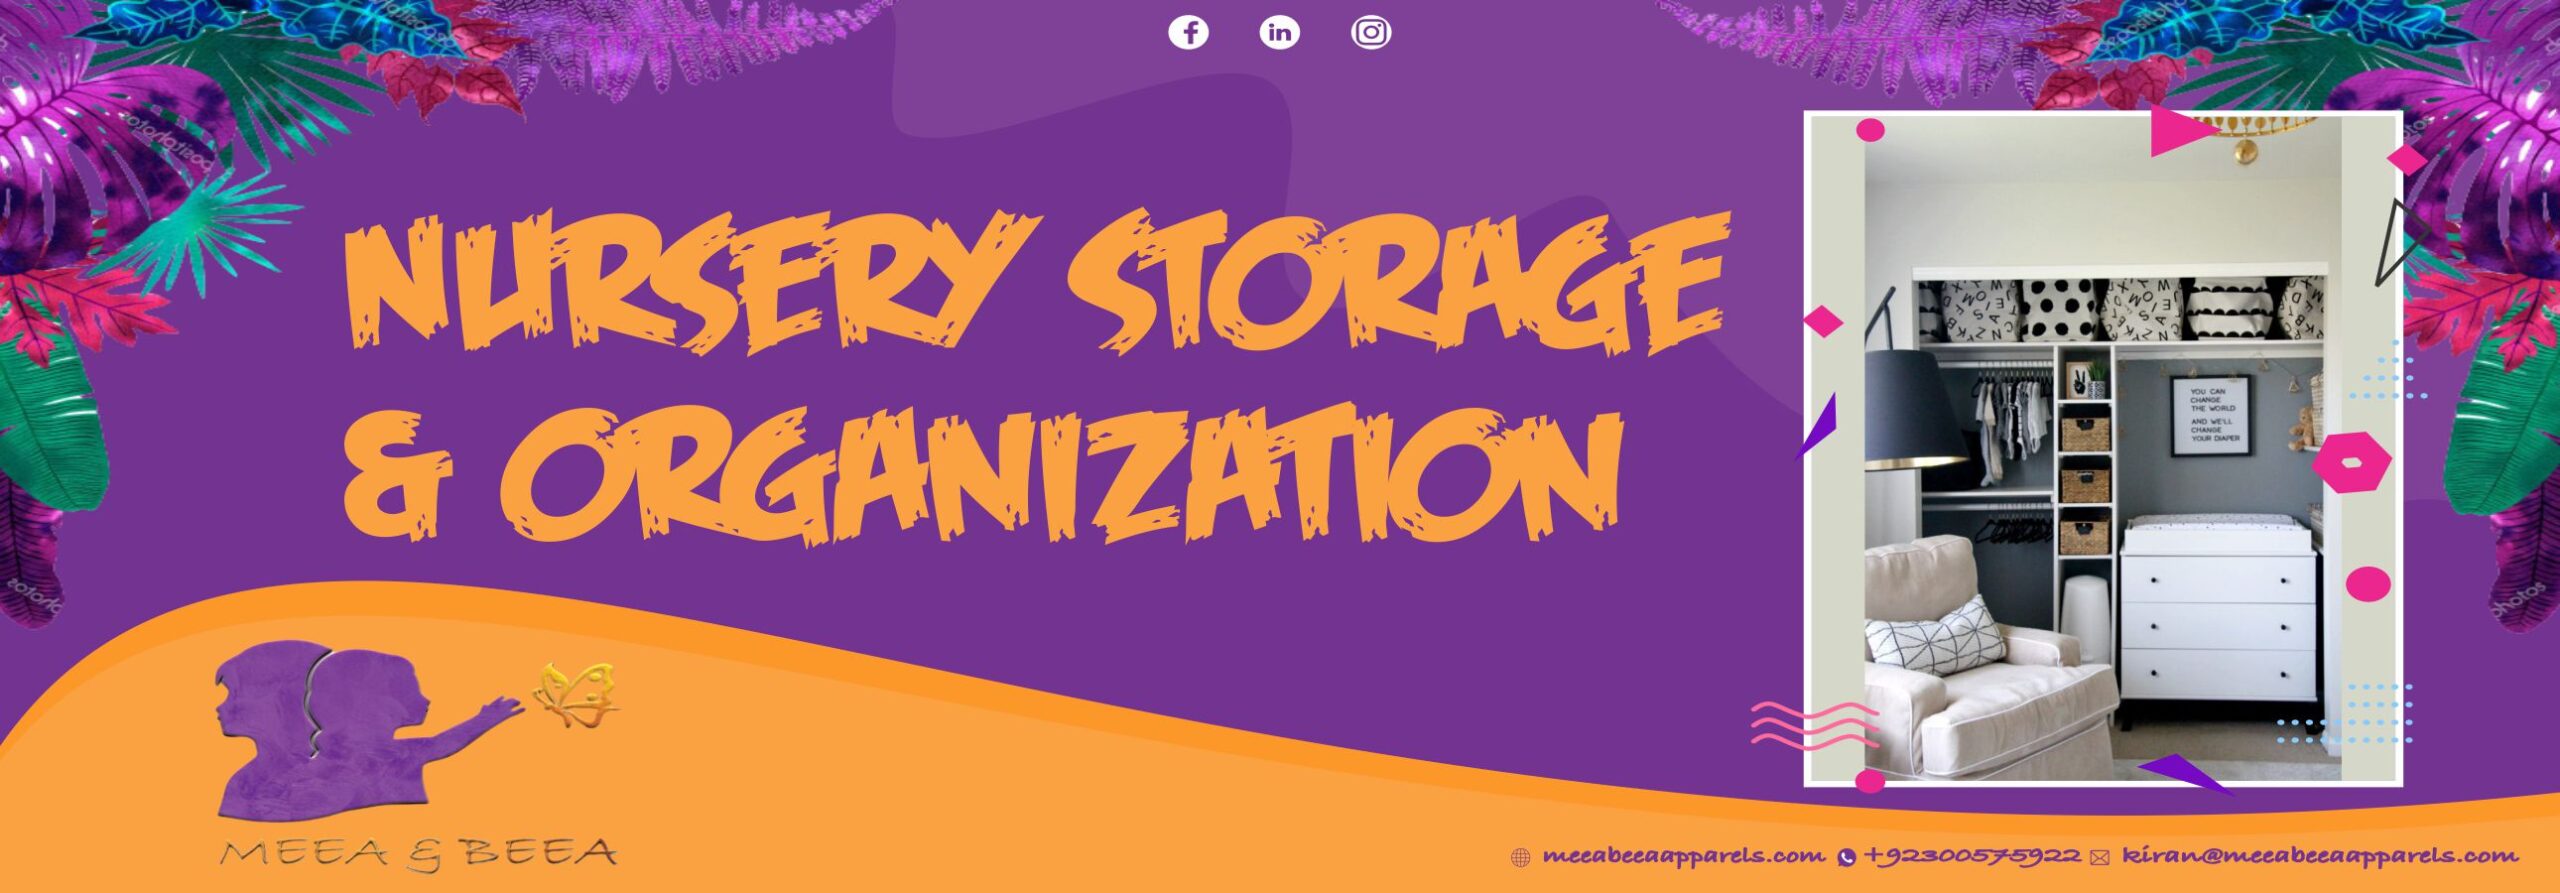 Nursery Storage & Organization